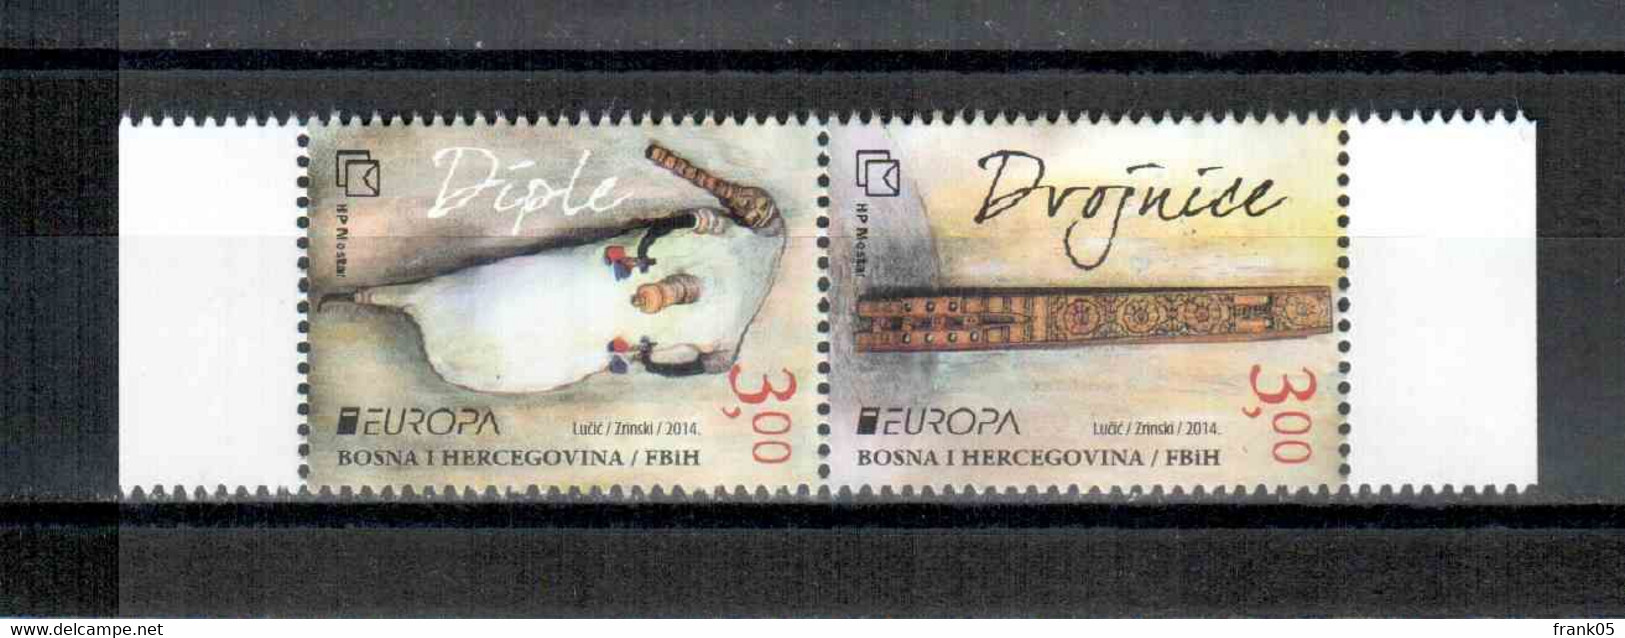 Bosnien-Herzegowina (kroatisch) / Bosnia-Herzegowina (croation Post) / Bosnie-Herzégovine Mostar Paar/pair 2014 EUROPA** - 2014